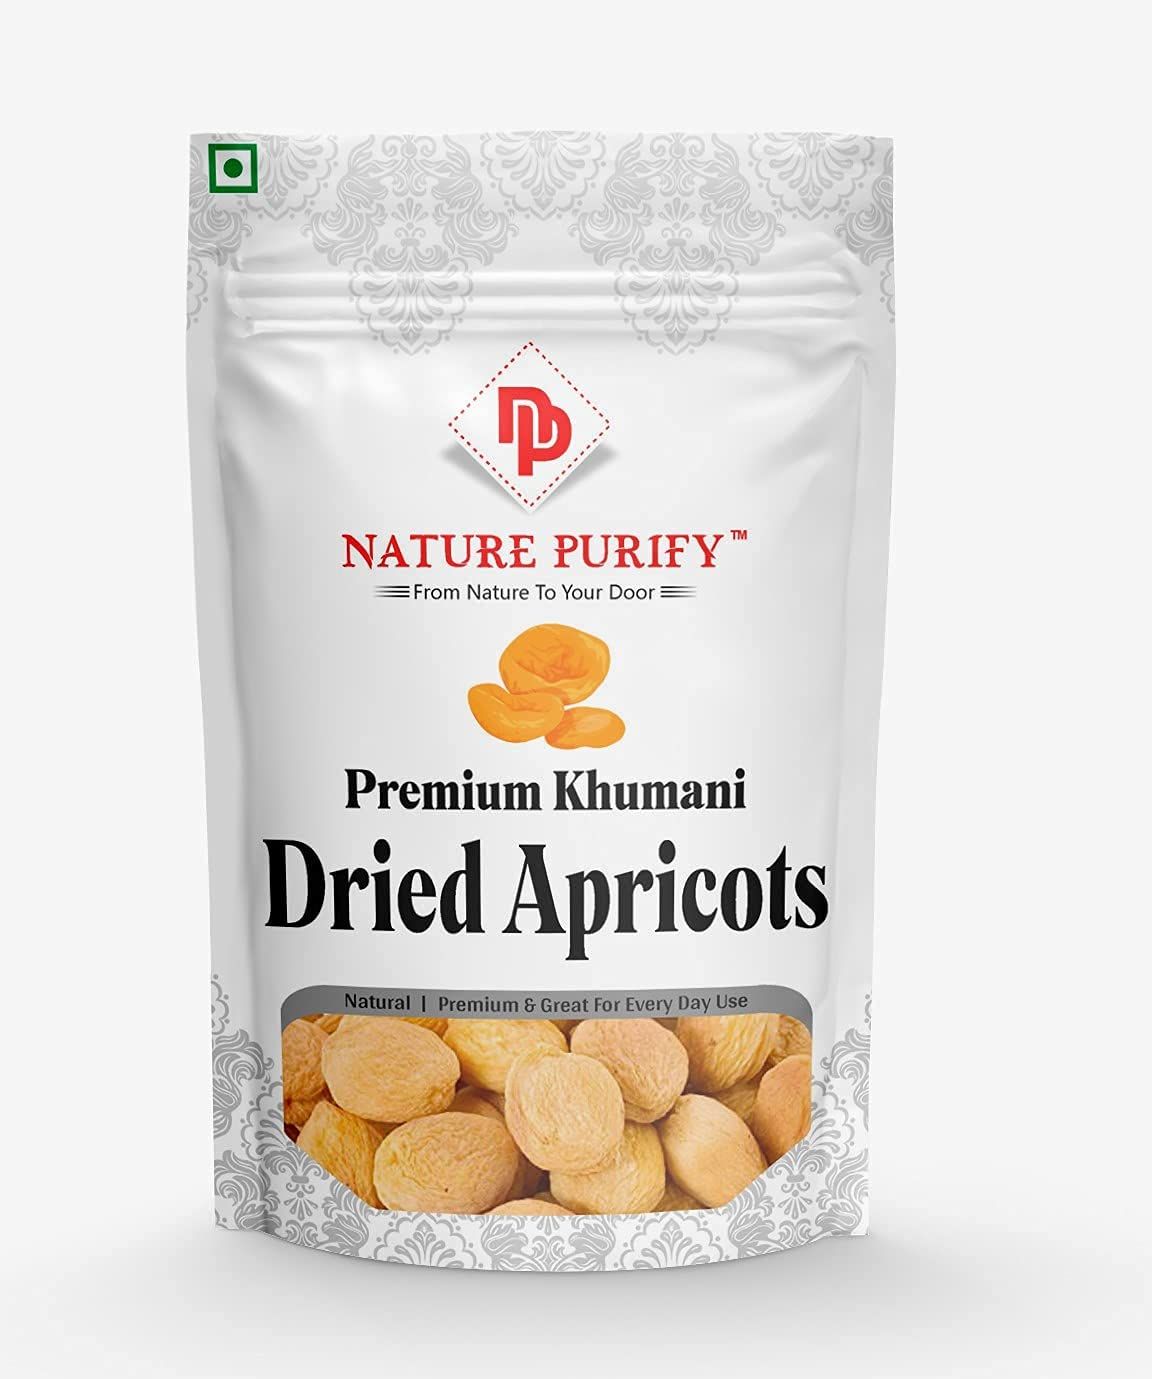 Nature Purify Dried Apricot Image